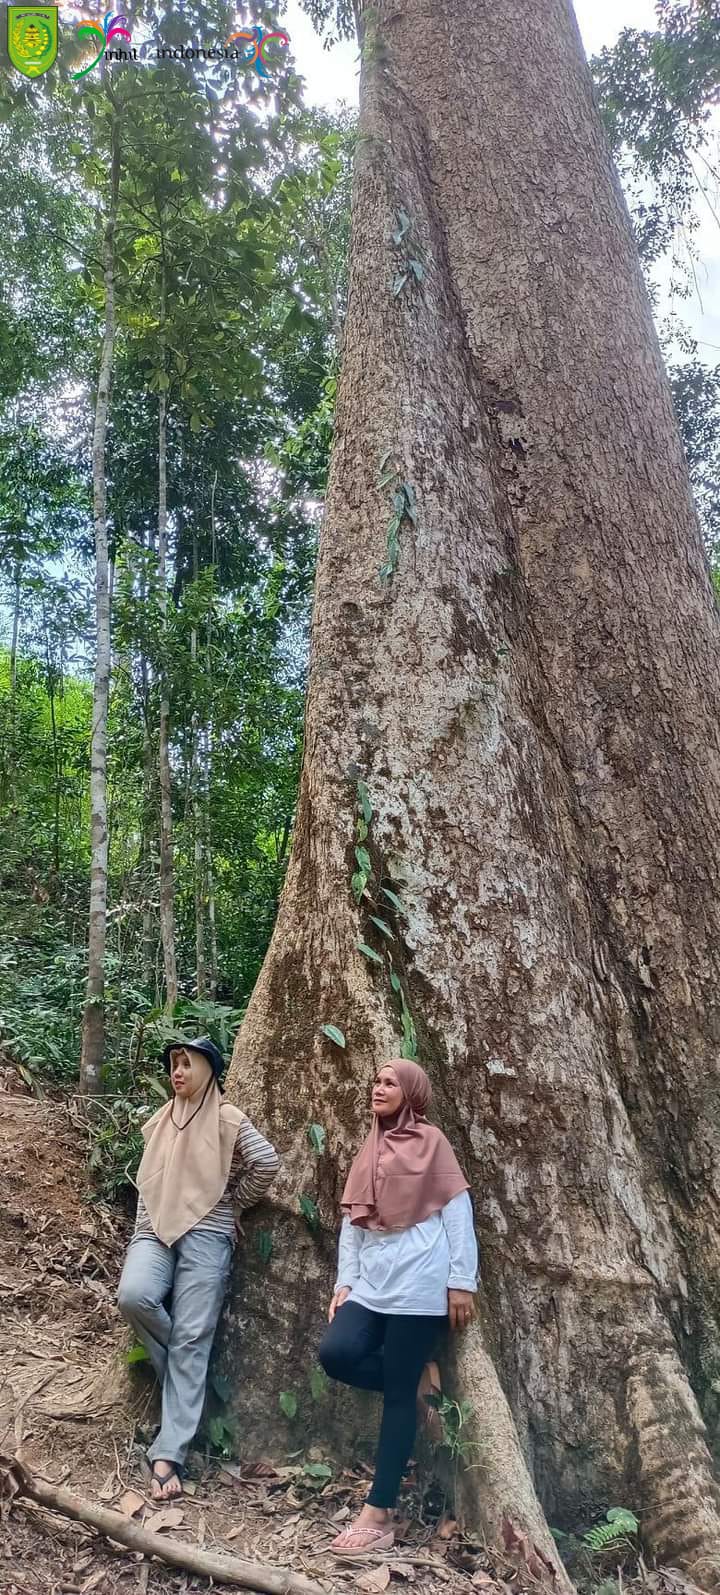 Tidak Perlu ke Kalsel Jika Ingin Melihat Pohon Mersawa, Cukup Datang ke Bukit Condong Inhil